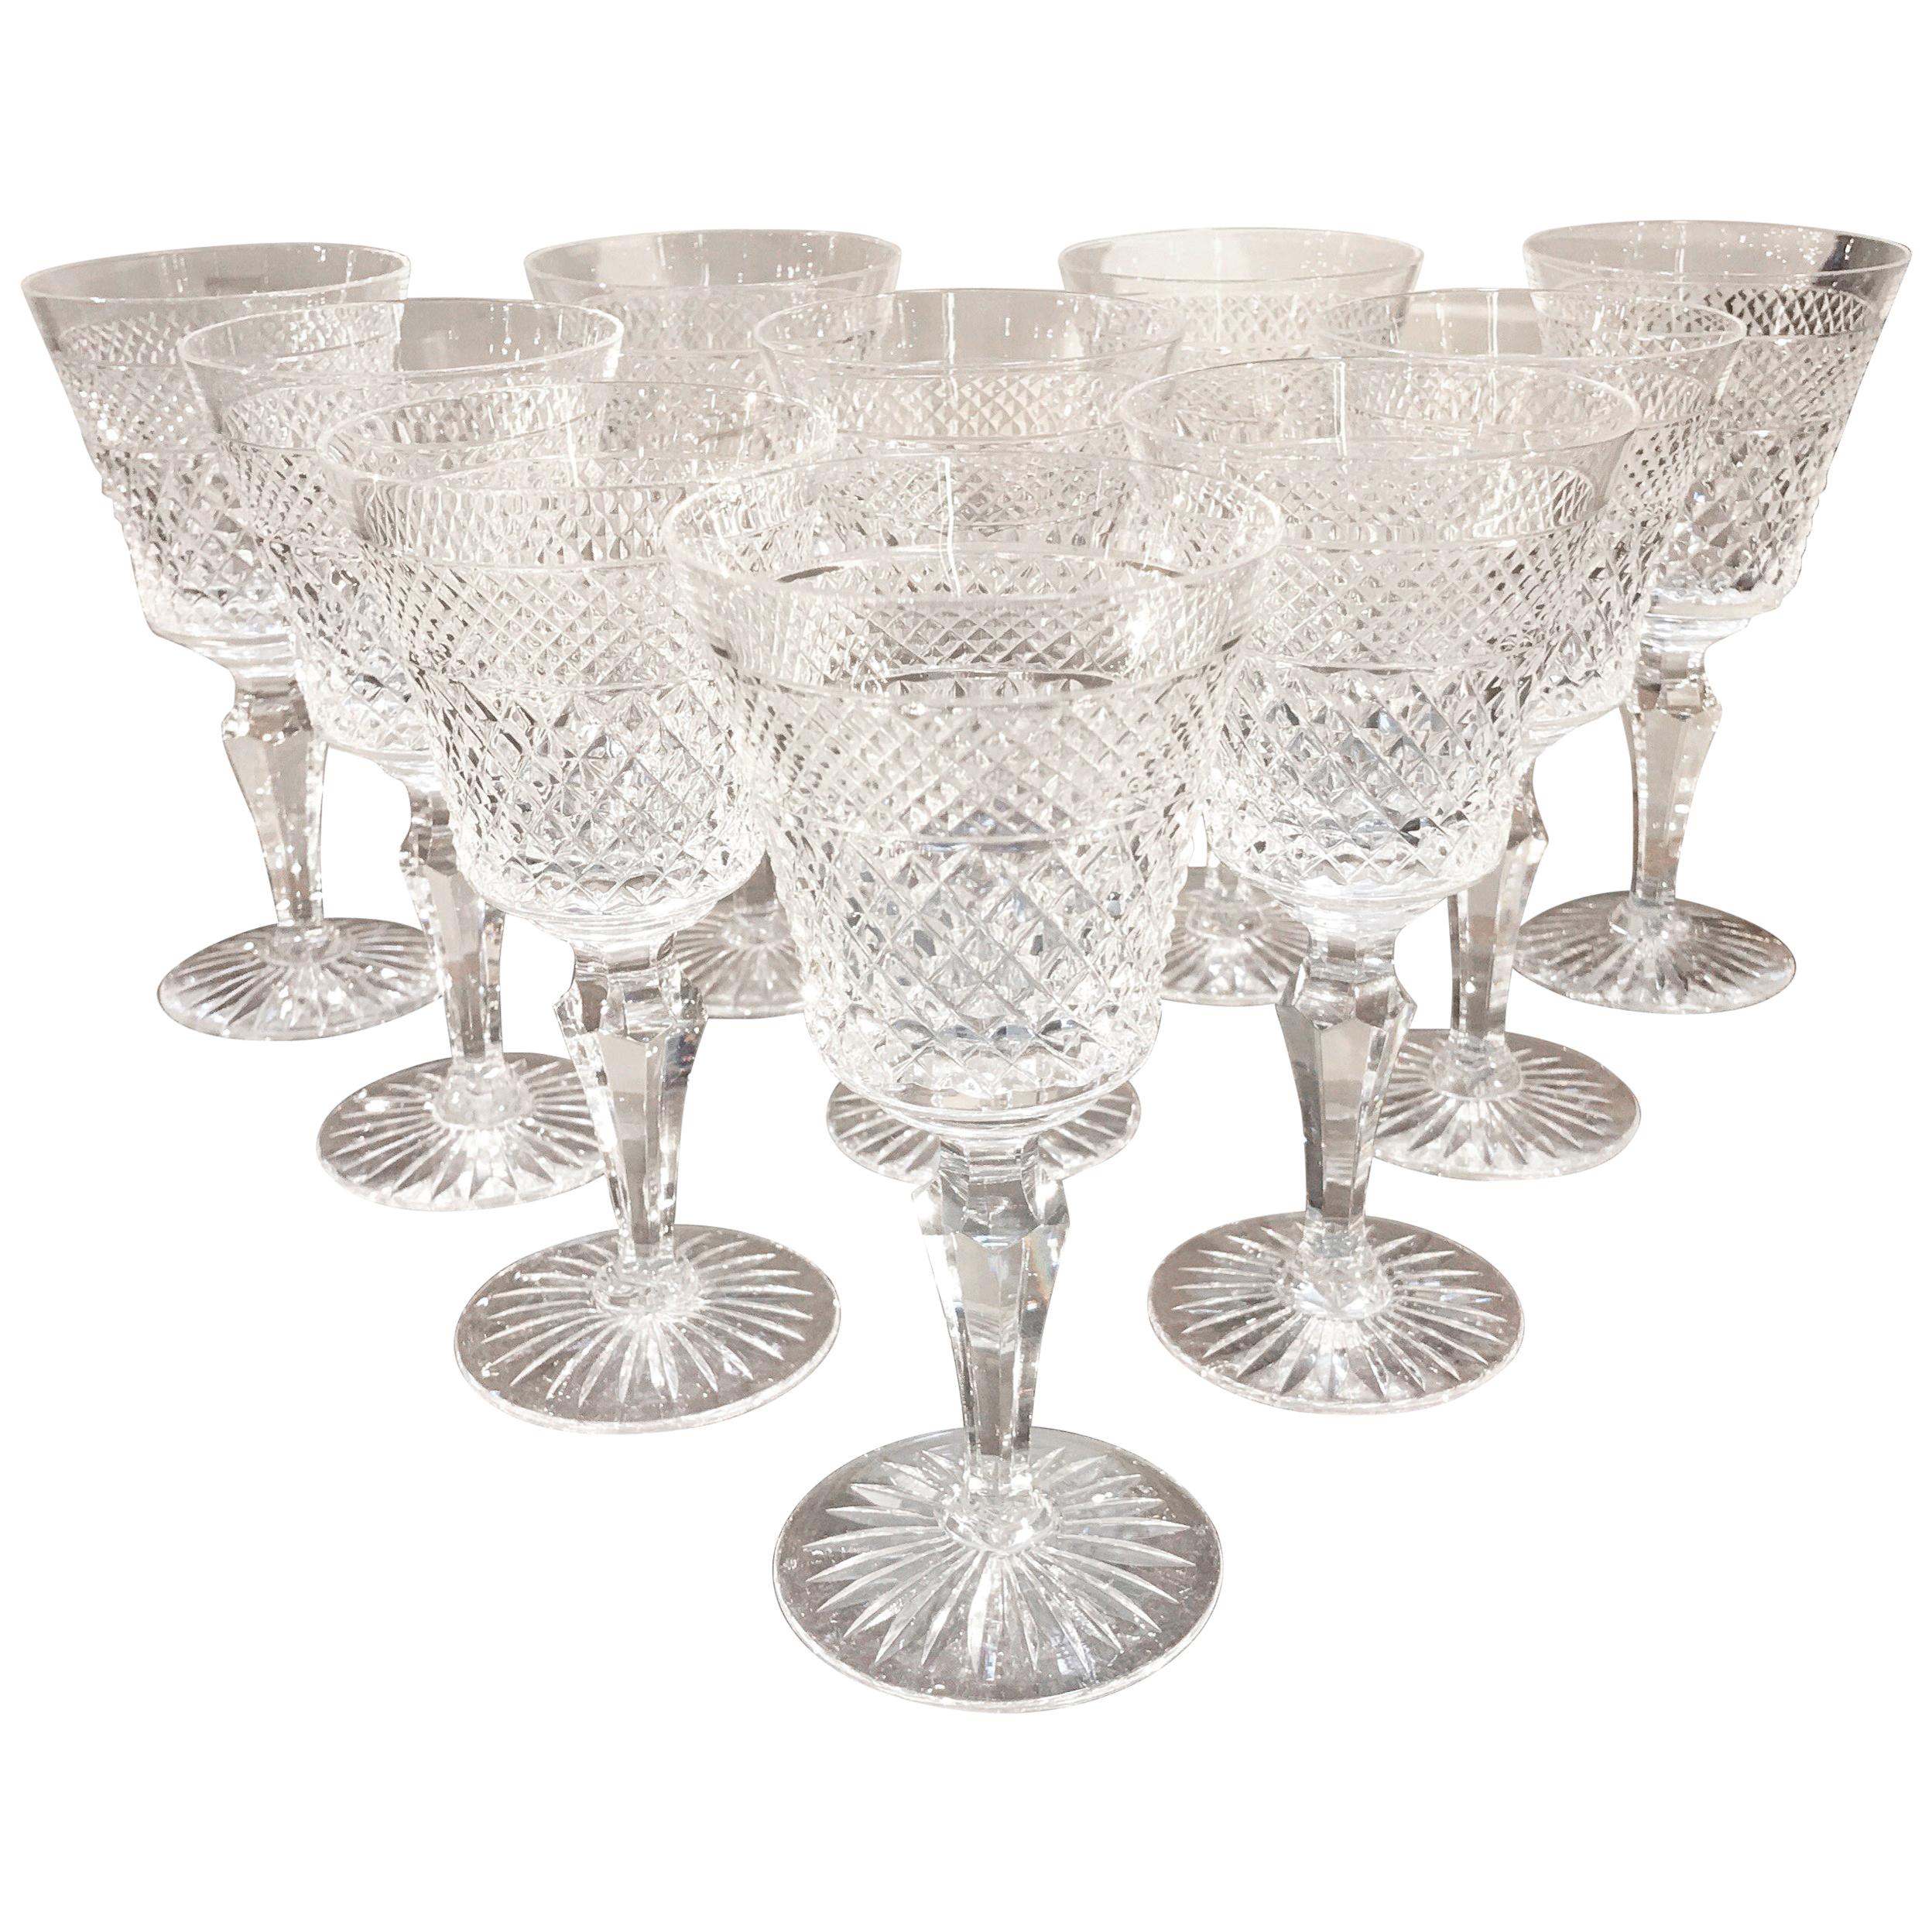 Set of 10 English Cut Crystal Wine Glasses